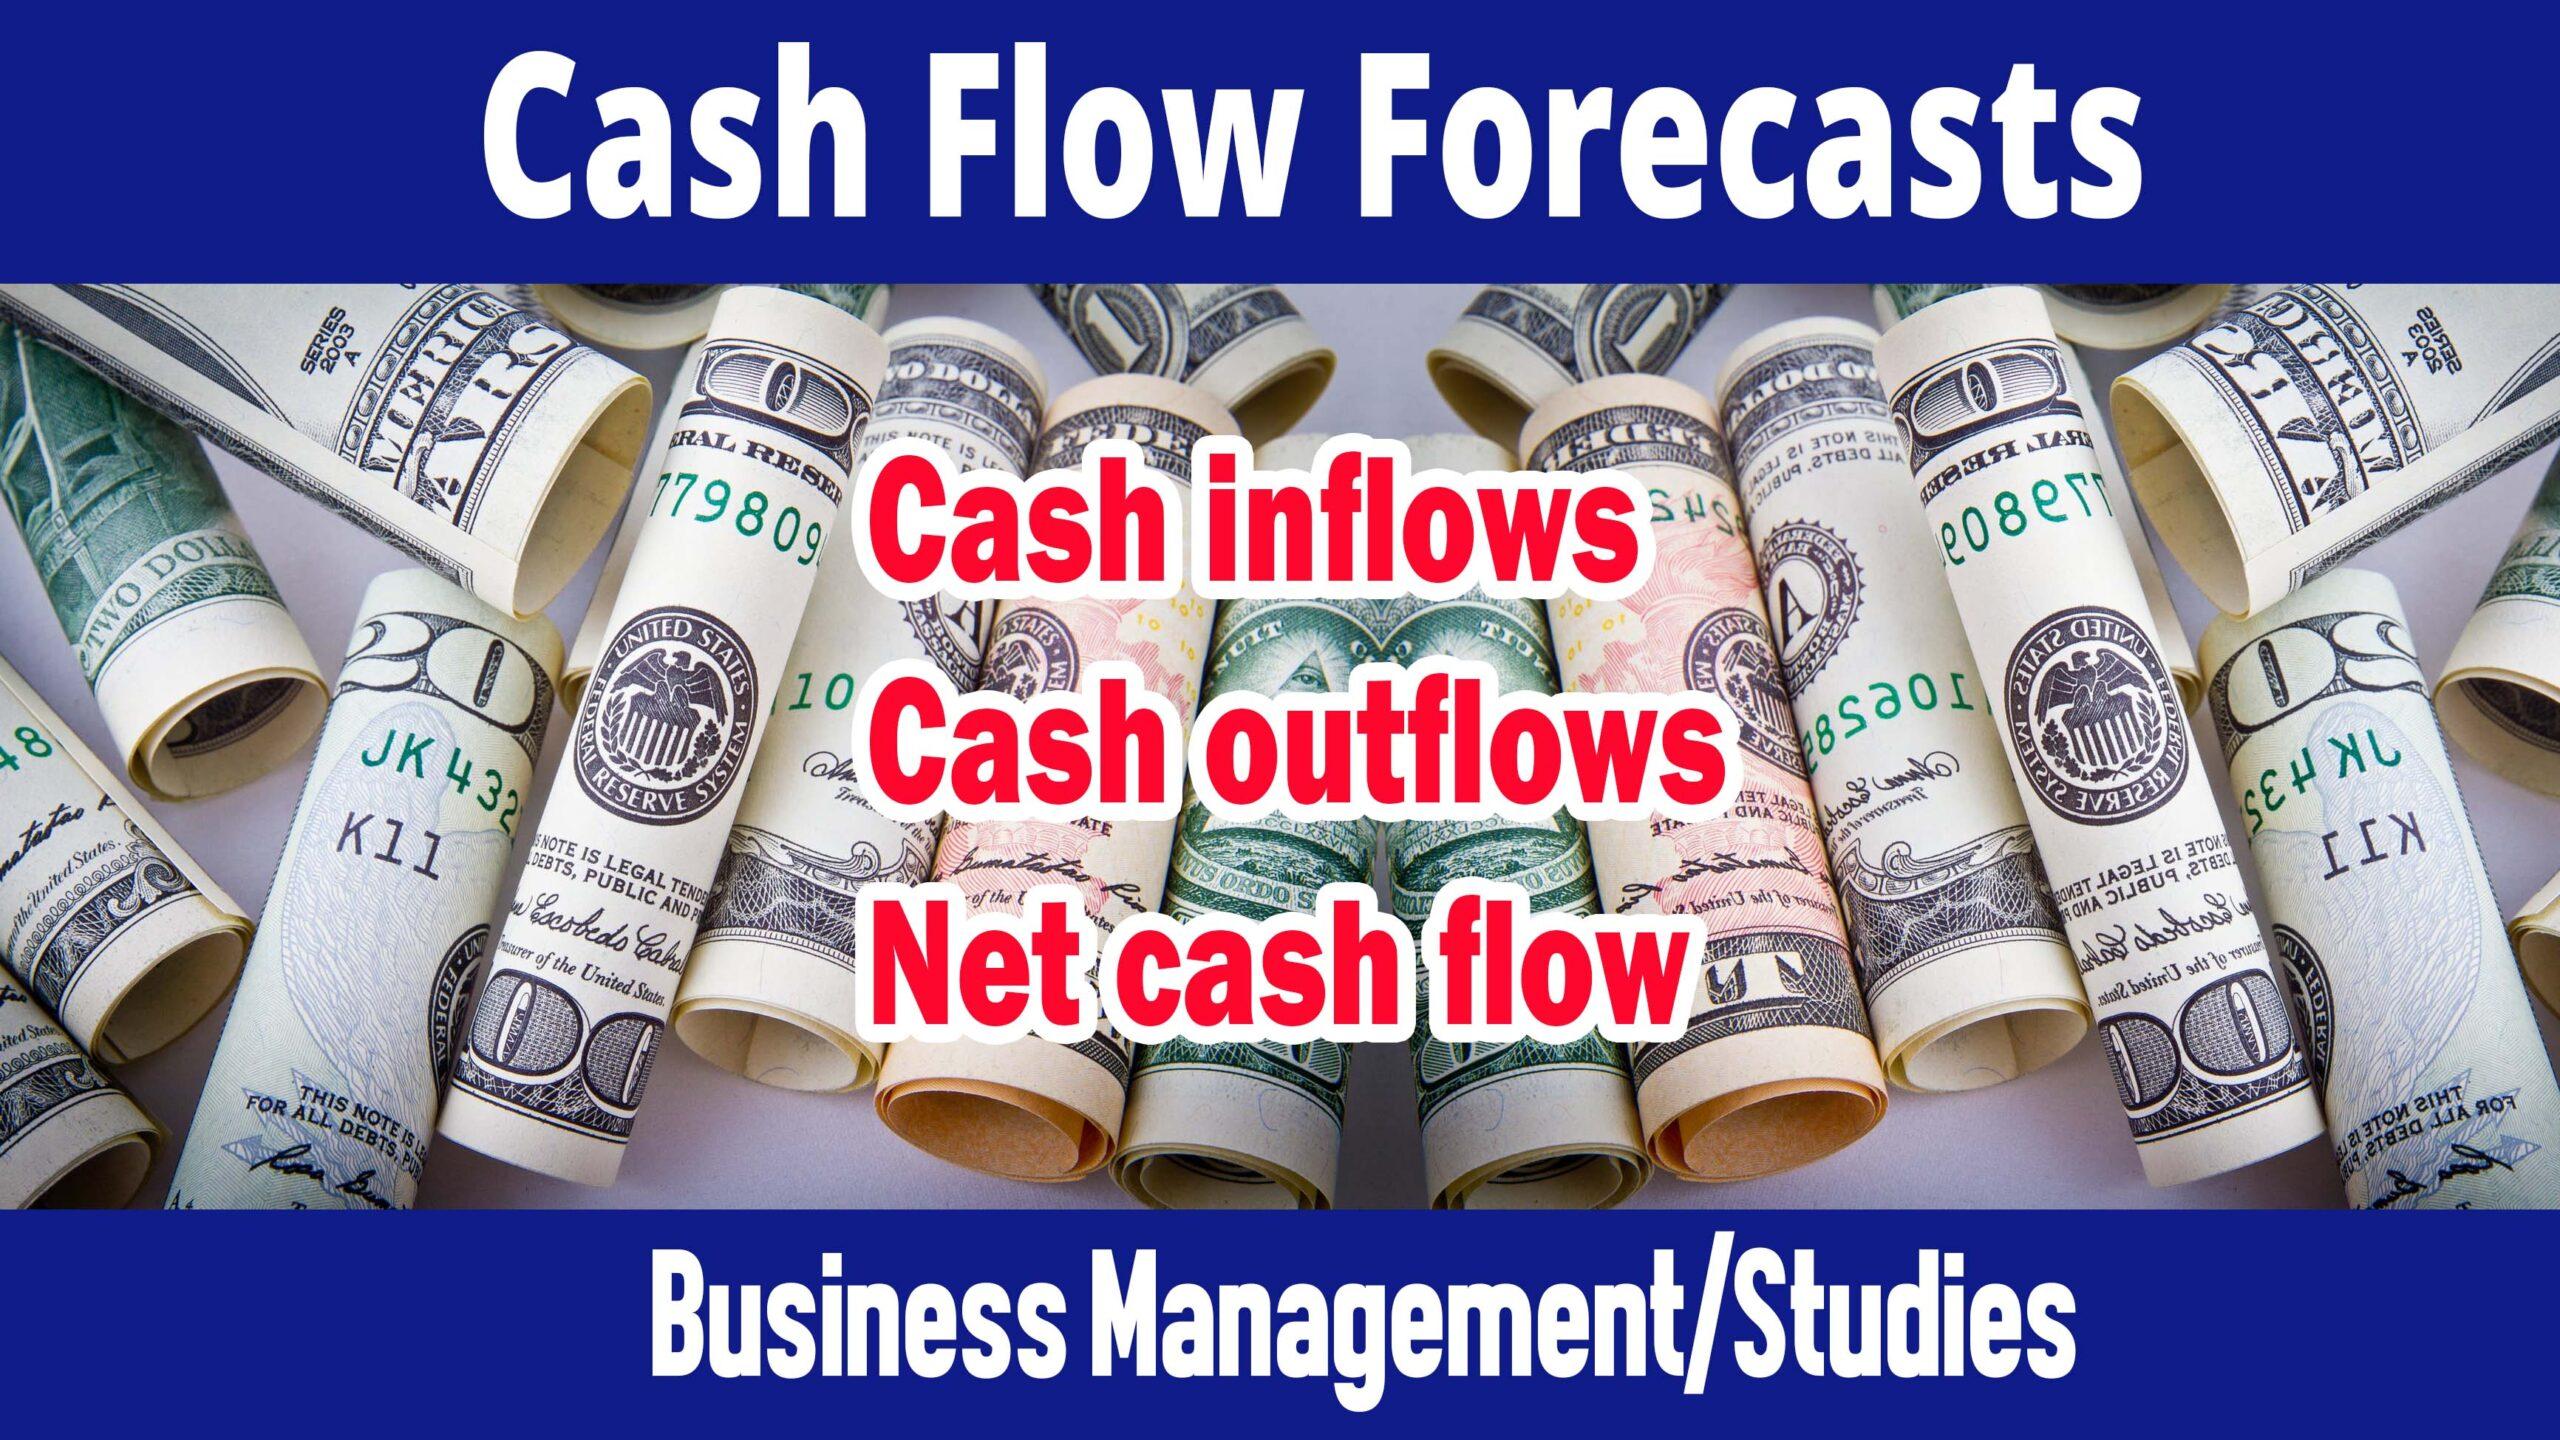 Cash flow forecasts